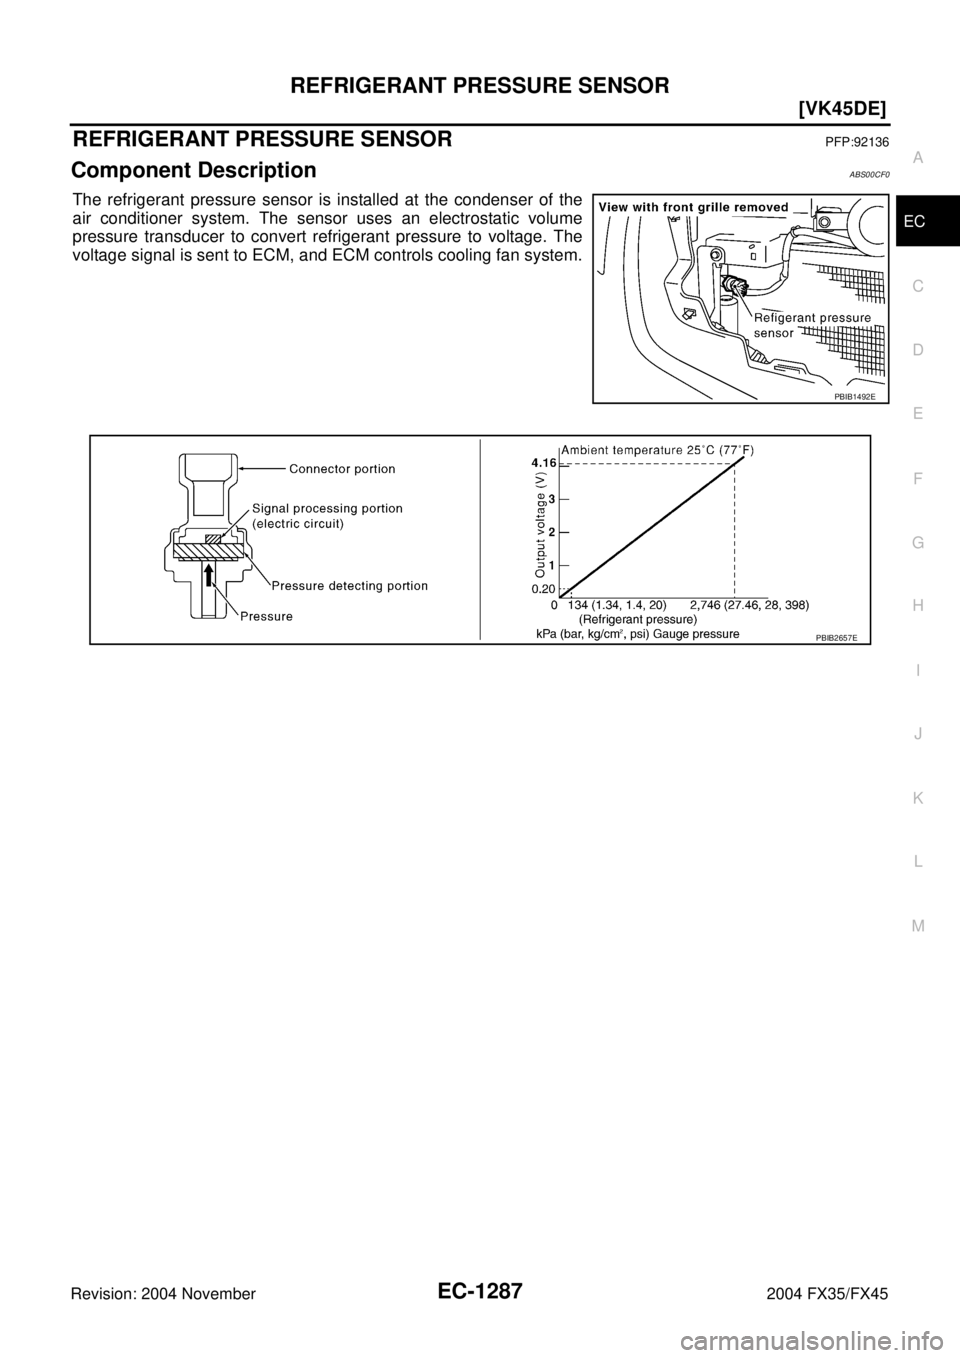 INFINITI FX35 2004  Service Manual REFRIGERANT PRESSURE SENSOR
EC-1287
[VK45DE]
C
D
E
F
G
H
I
J
K
L
MA
EC
Revision: 2004 November 2004 FX35/FX45
REFRIGERANT PRESSURE SENSORPFP:92136
Component DescriptionABS00CF0
The refrigerant pressur